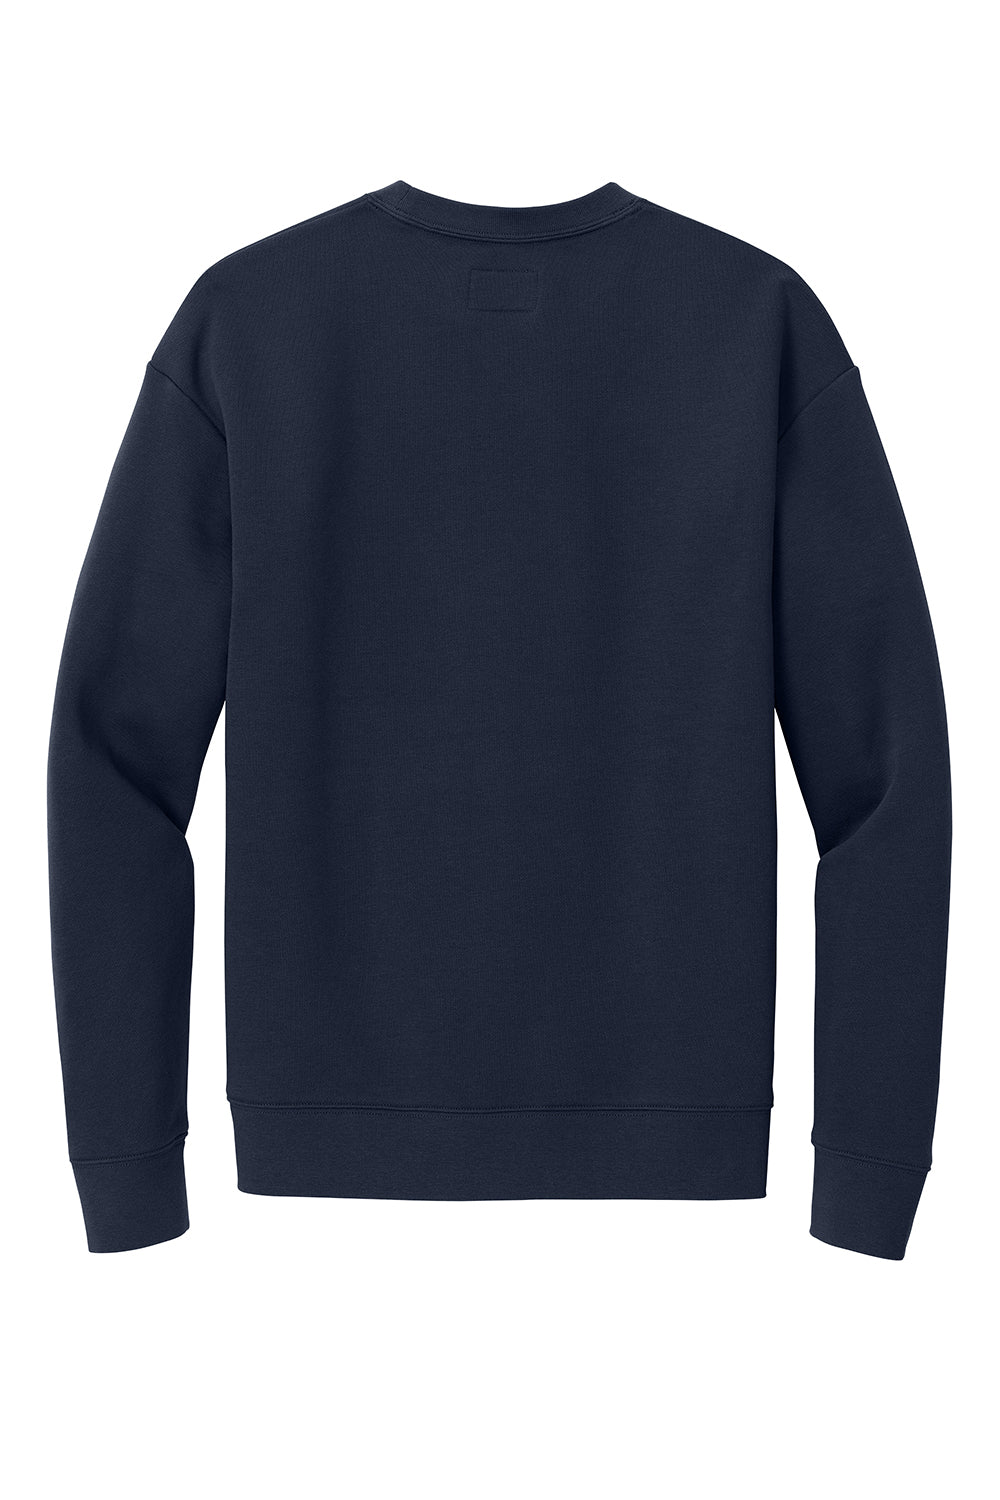 New Era NEA527 Mens Heritage Fleece Crewneck Sweatshirt w/ Pocket True Navy Blue Flat Back